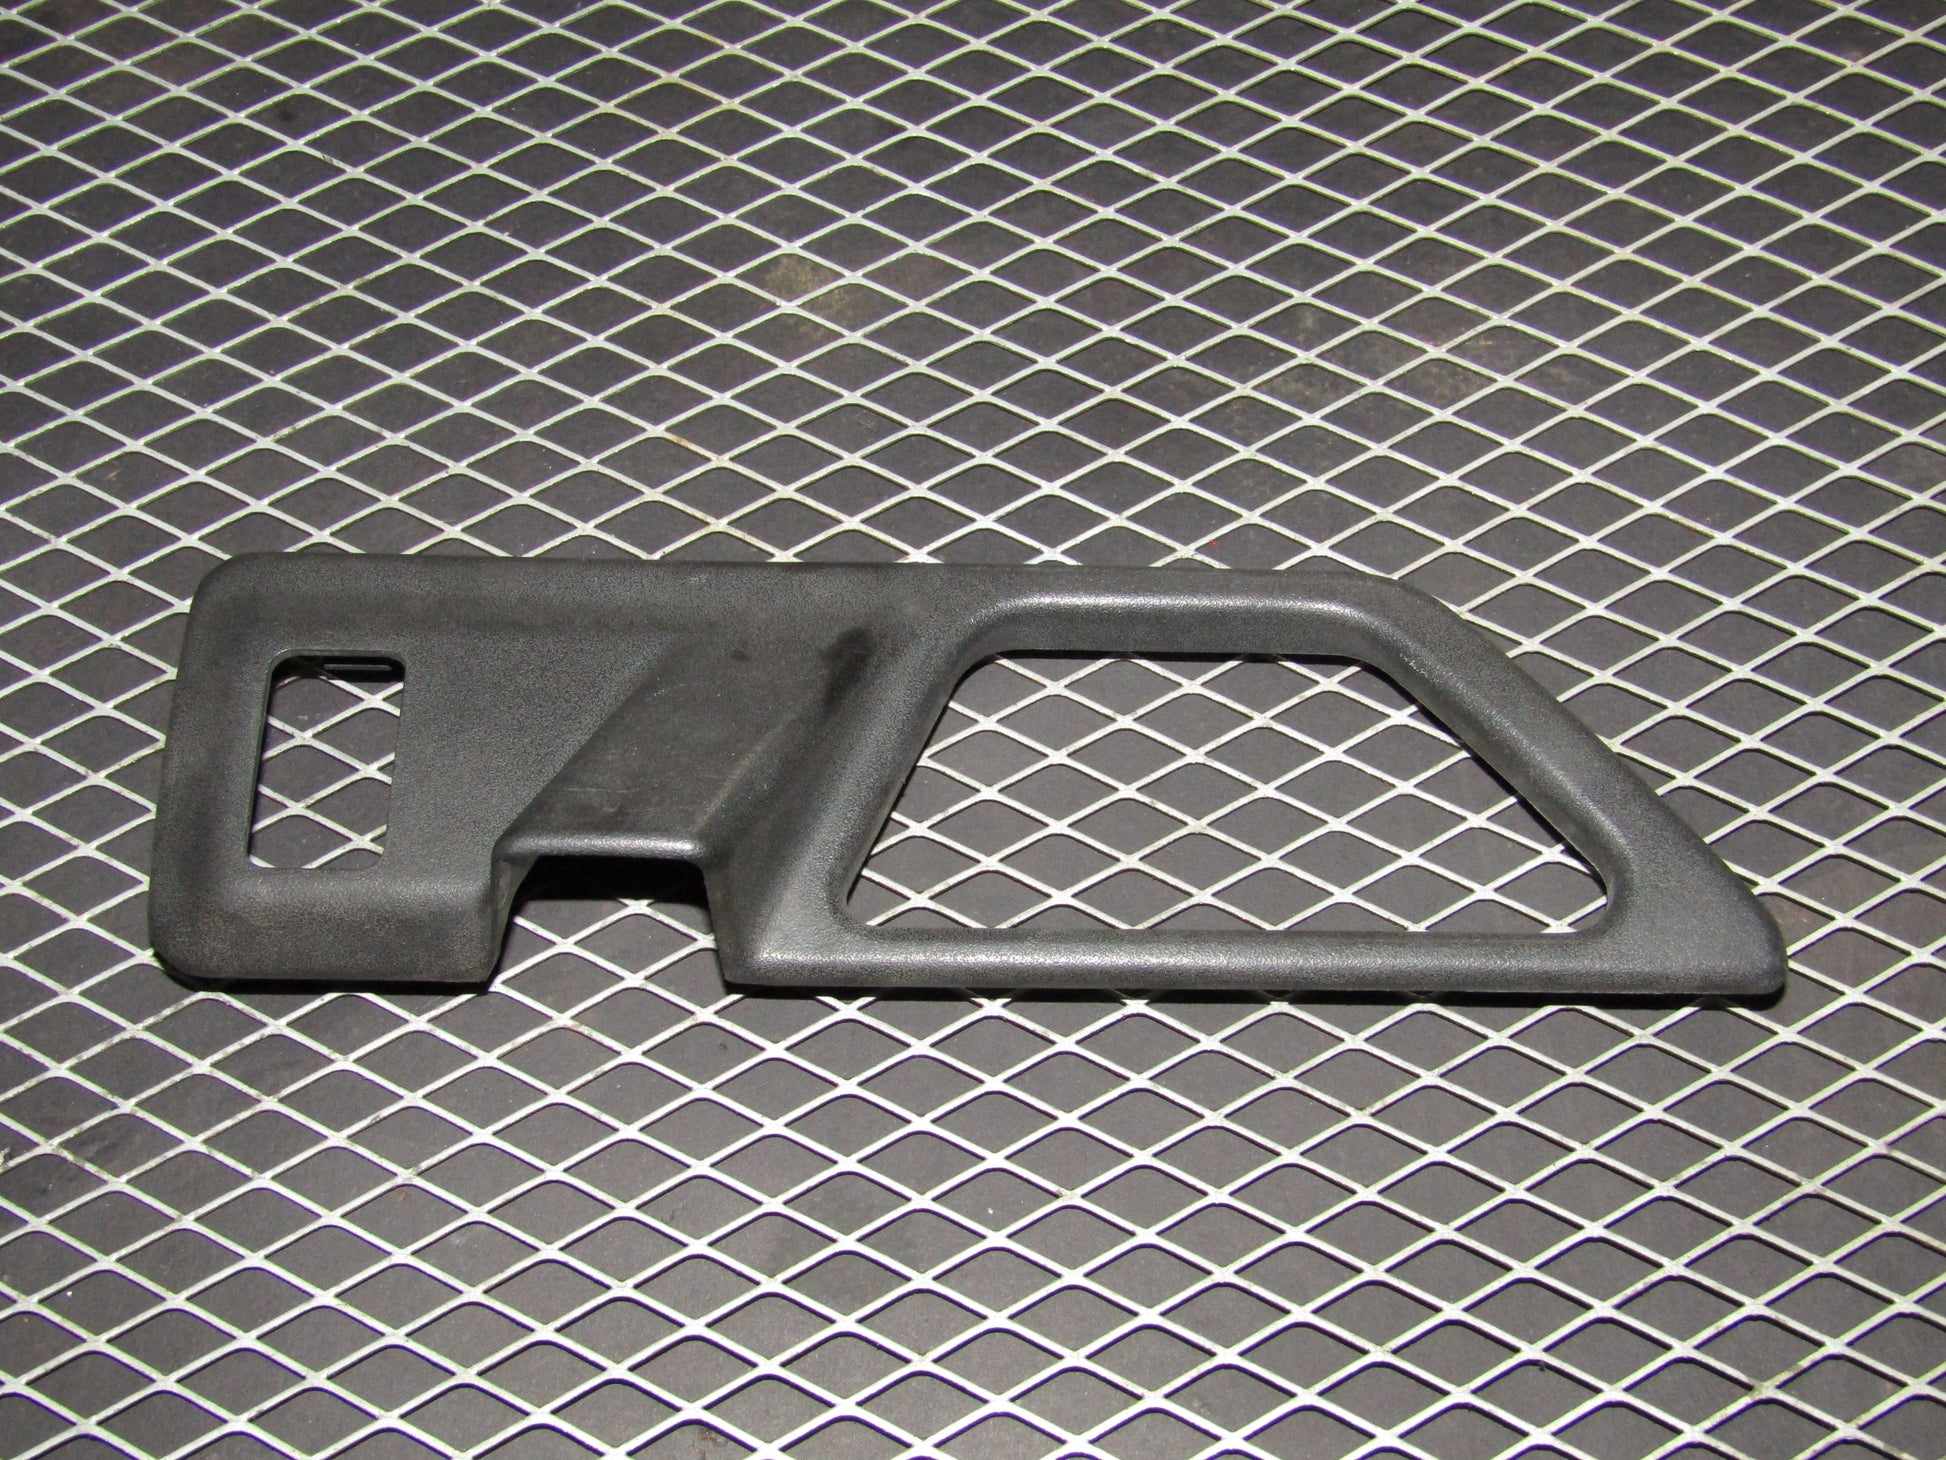 86-93 Mercedes Benz 300E OEM Rear Interior Door Handle Bezel Trim Cover - Left